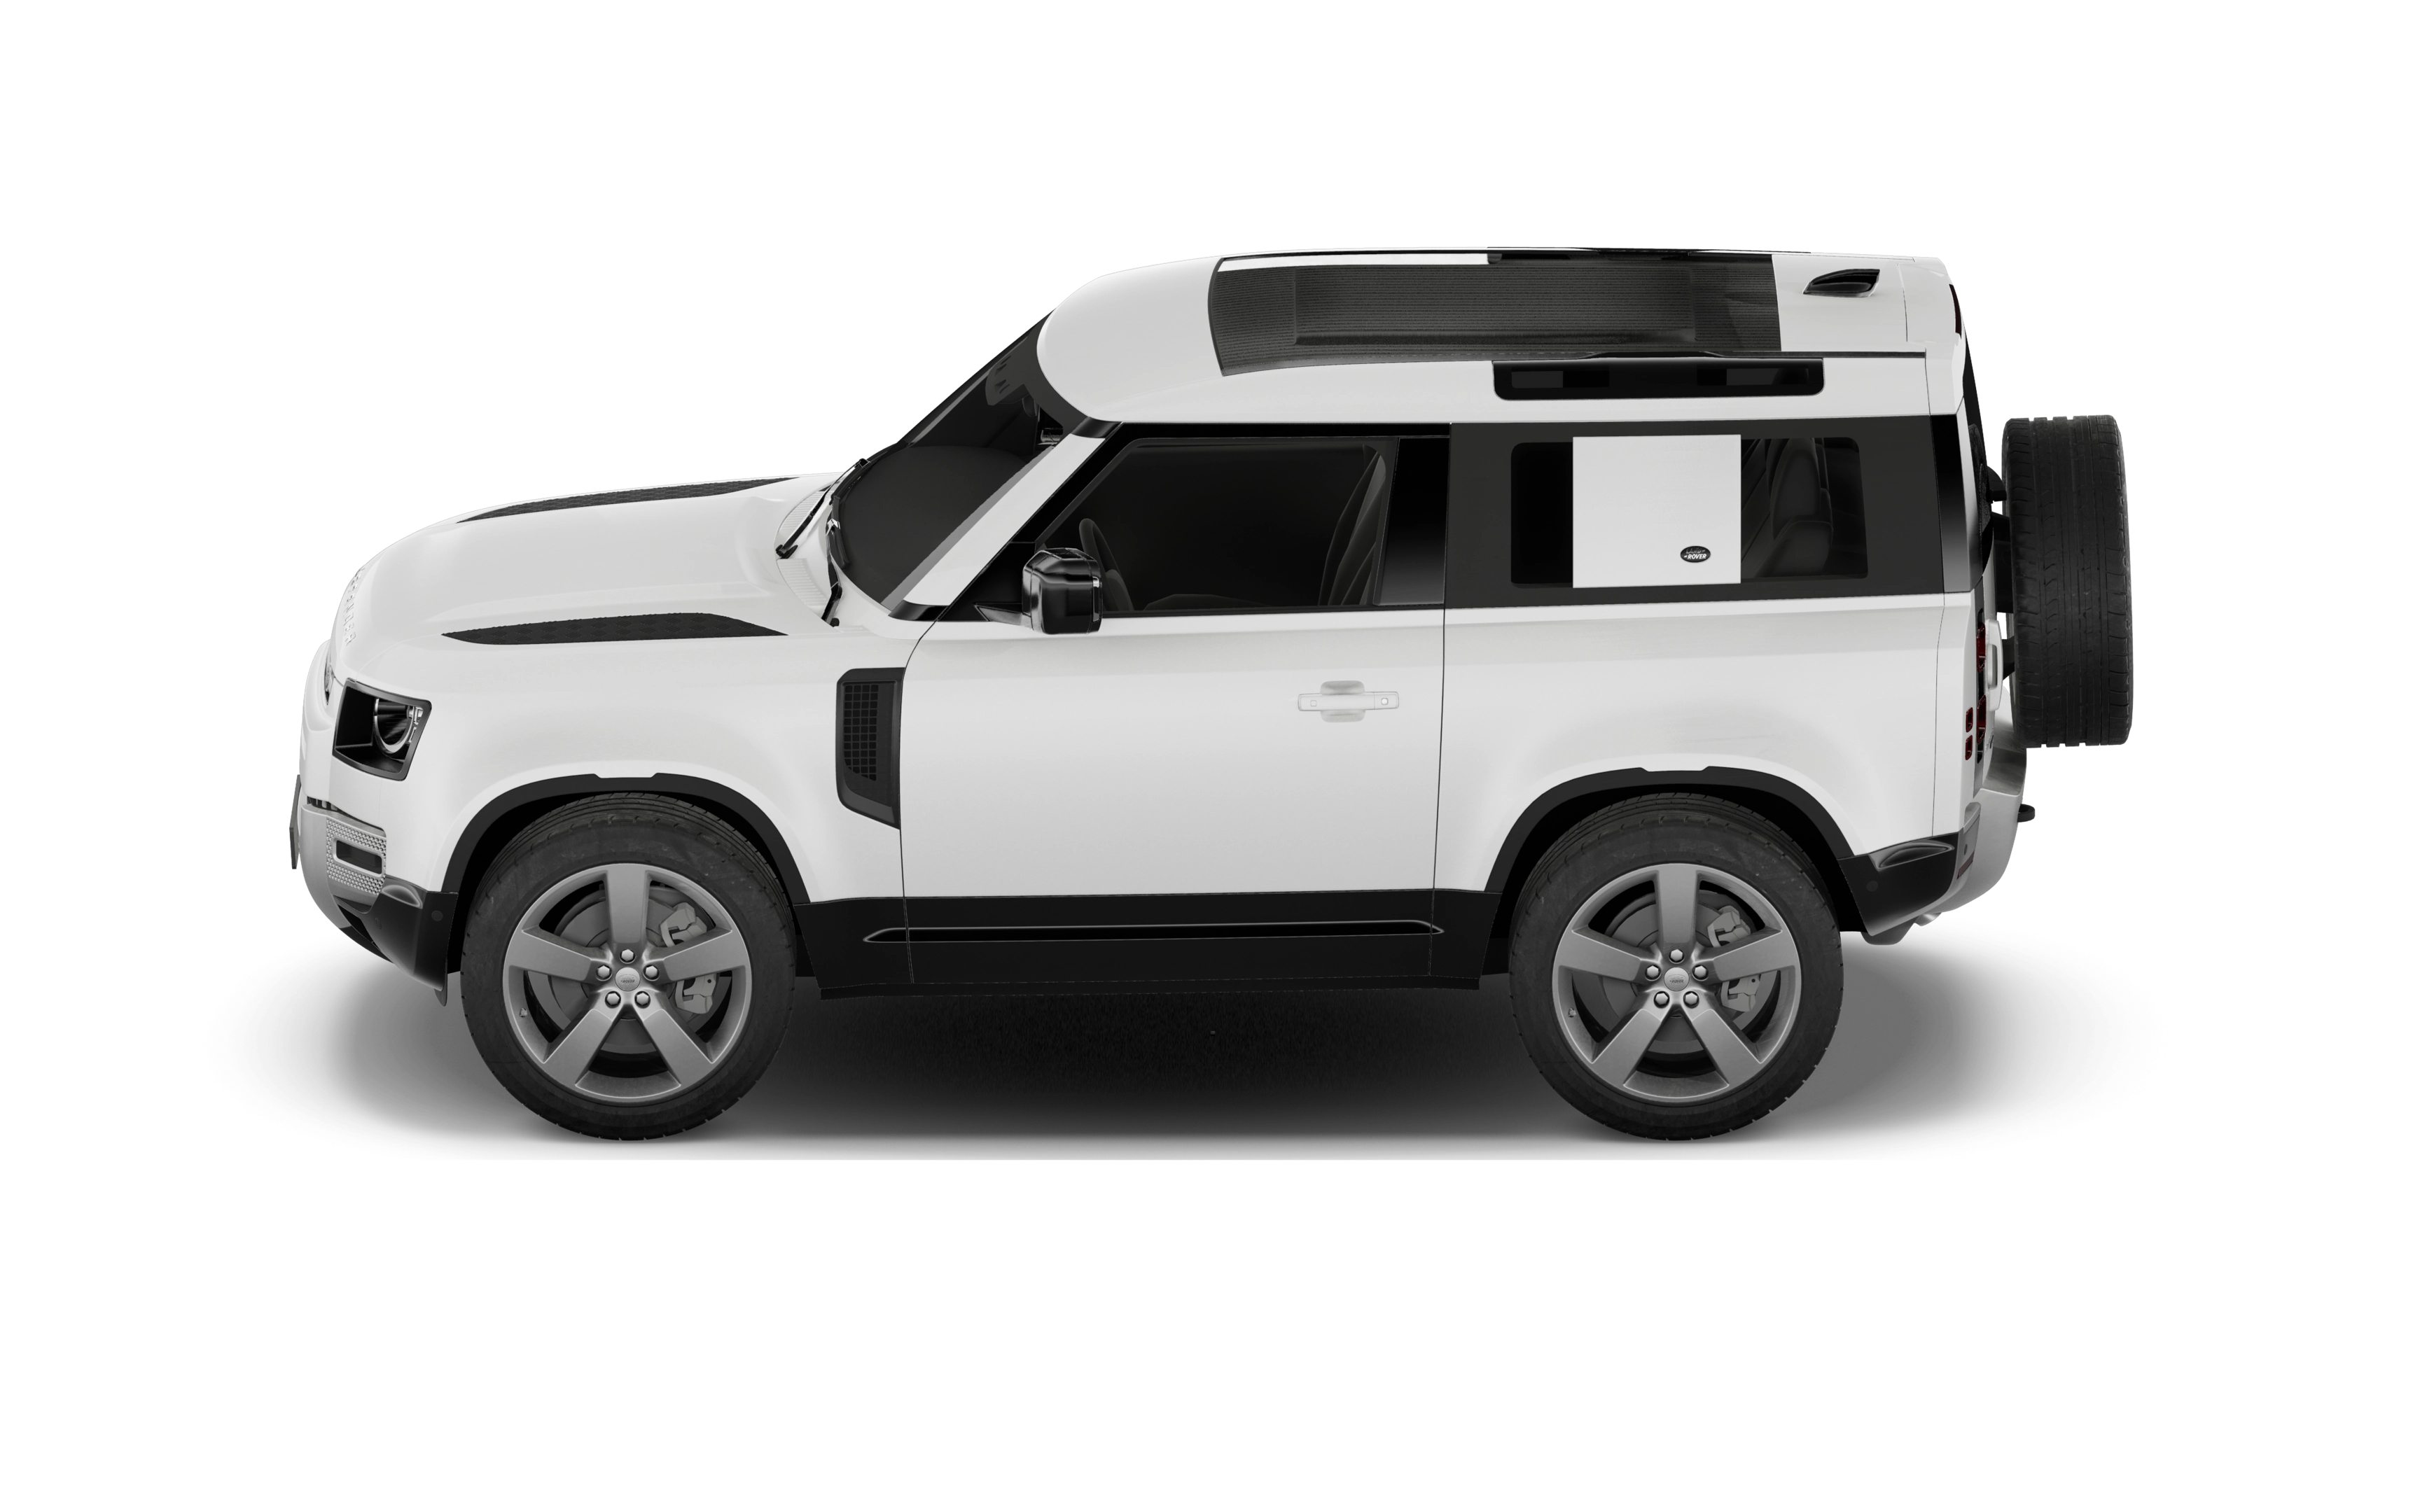 Land rover defender estate 3.0 d300 hse 110 5 doors auto [6 seat]